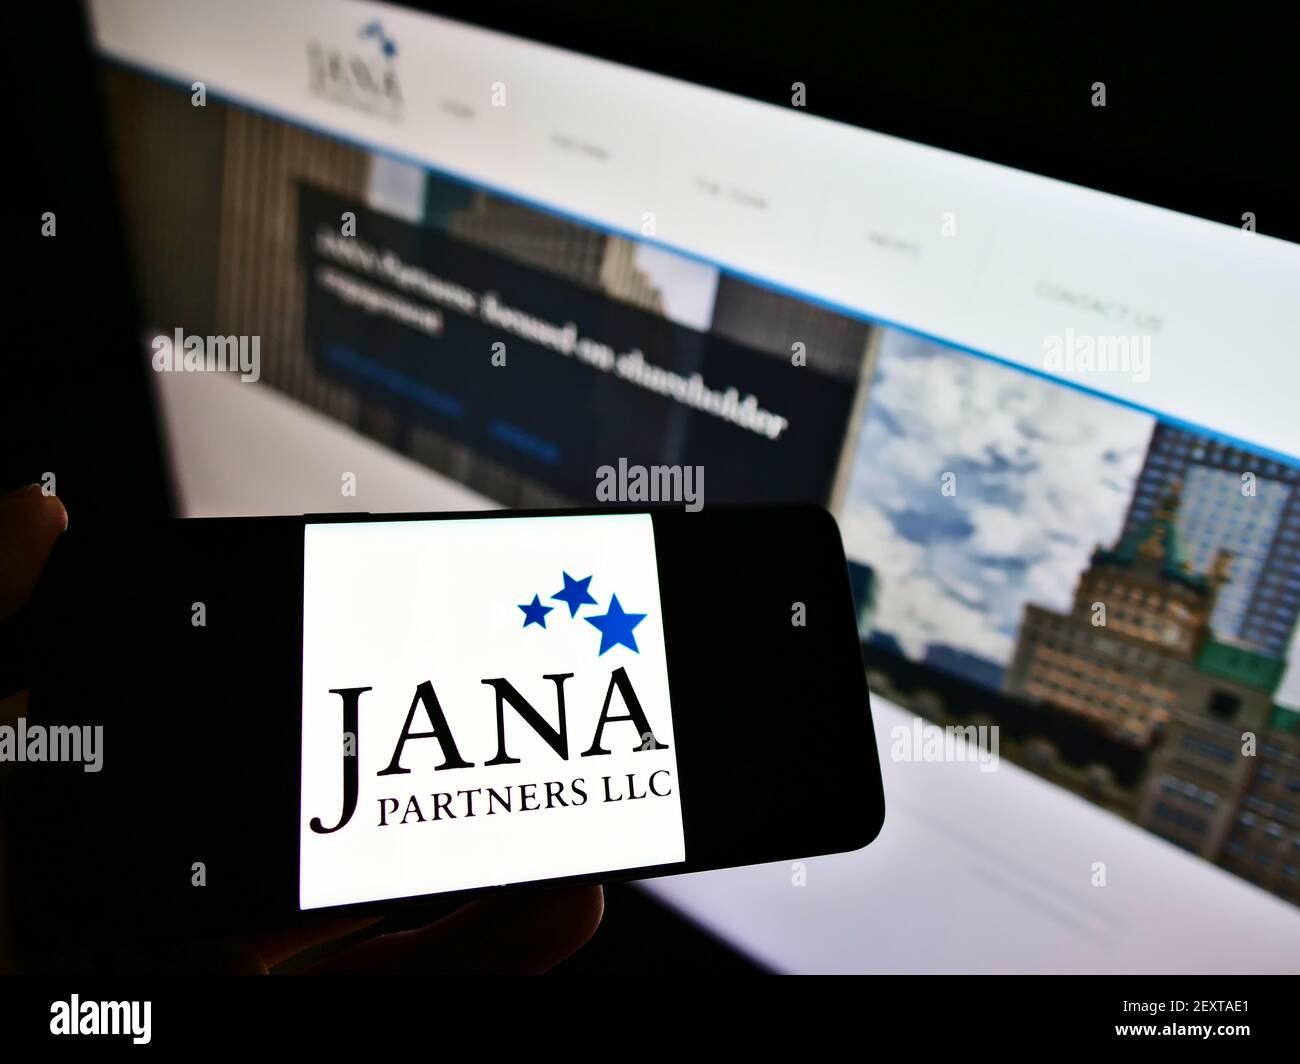 Jana partners llc hi-res stock photography and images - Alamy